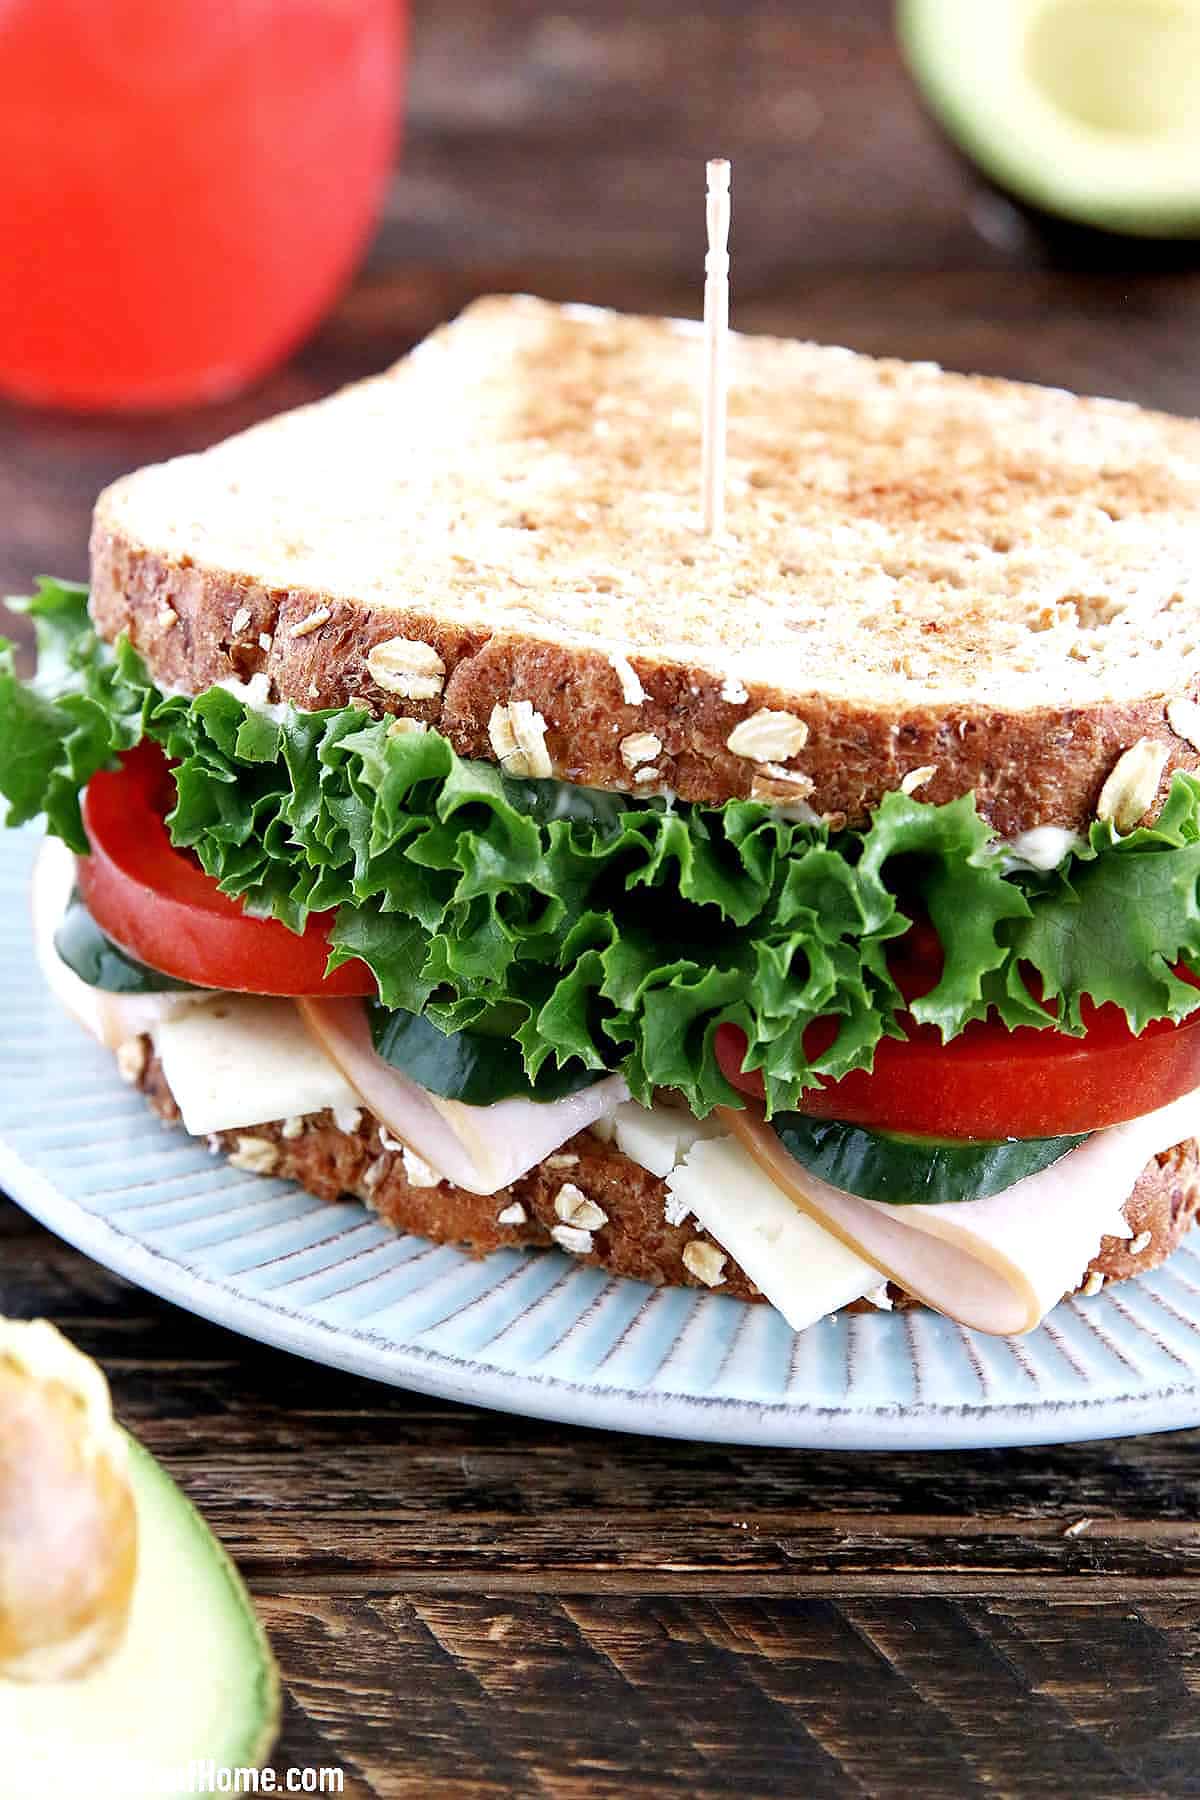 https://www.valyastasteofhome.com/wp-content/uploads/2022/01/The-Best-Turkey-Sandwich-Recipe-Super-Easy-to-Make-3.jpg